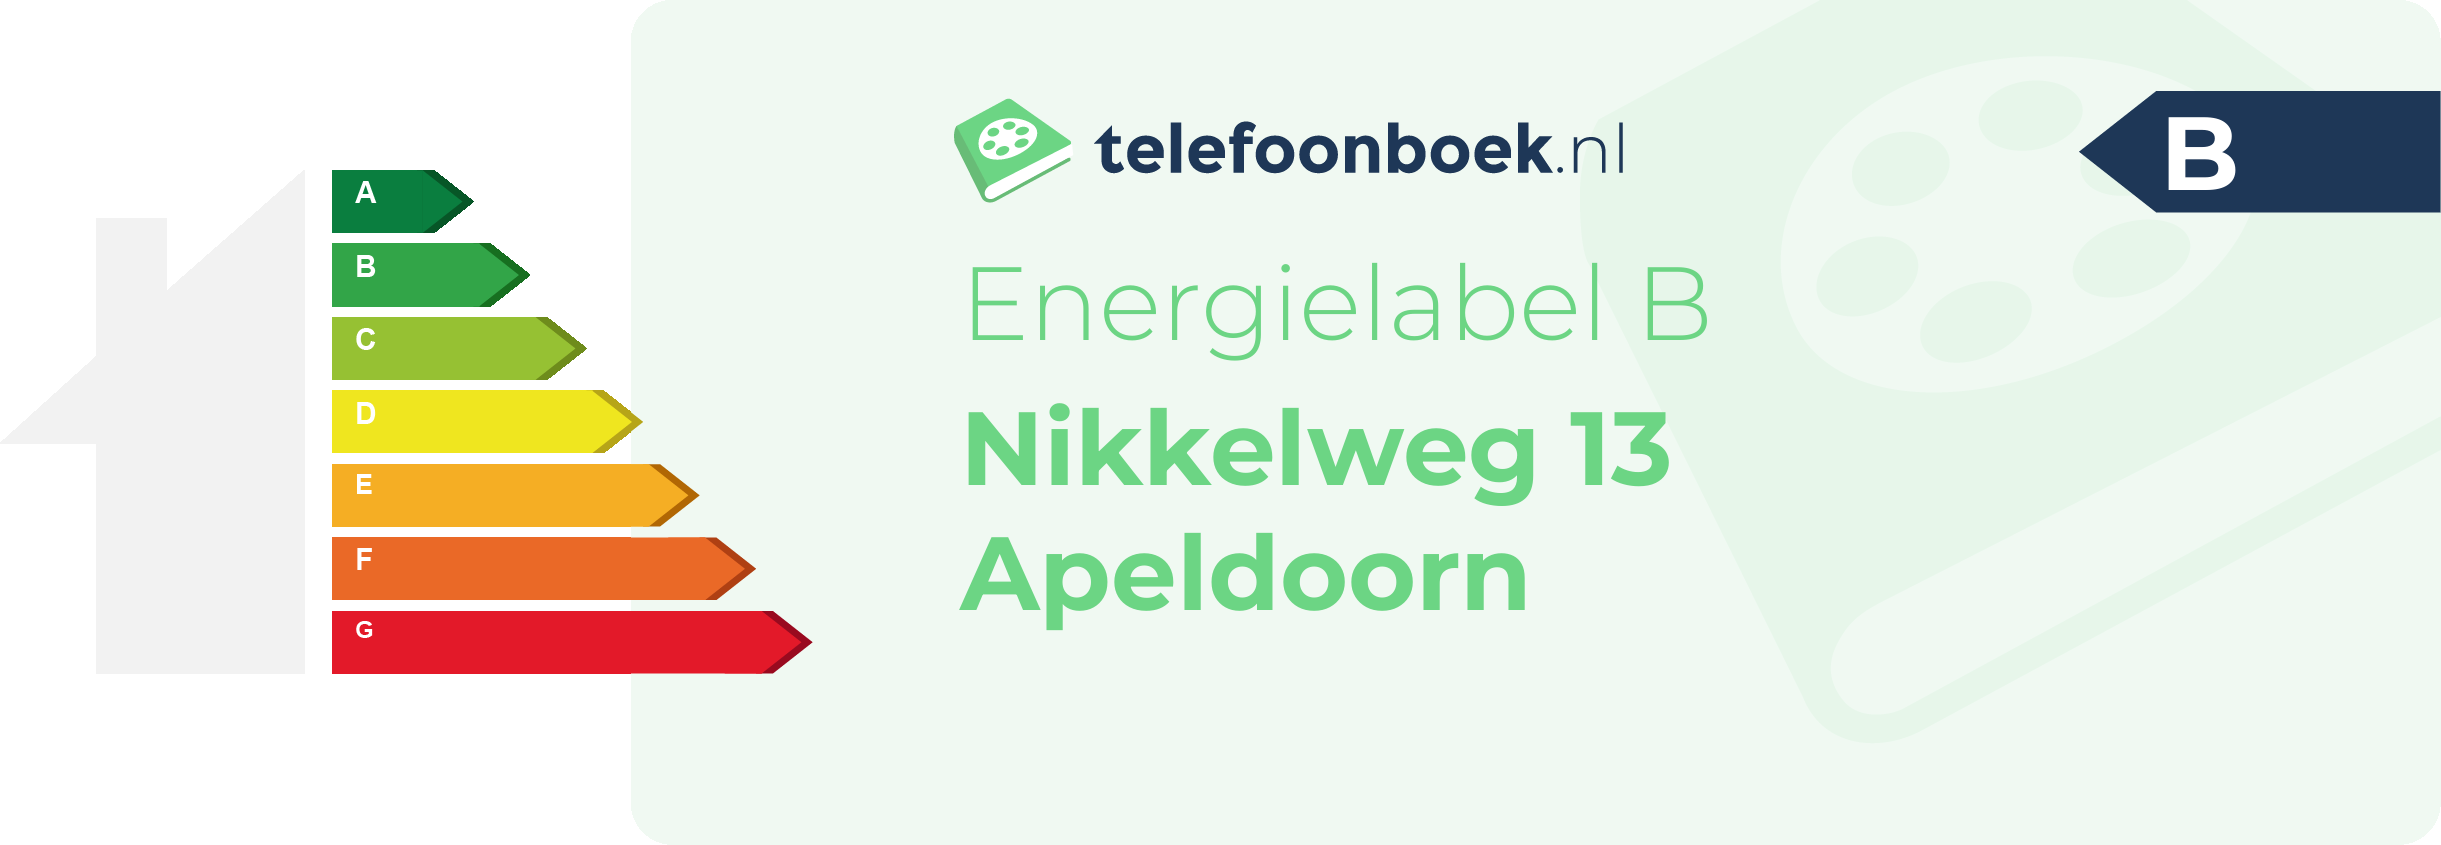 Energielabel Nikkelweg 13 Apeldoorn